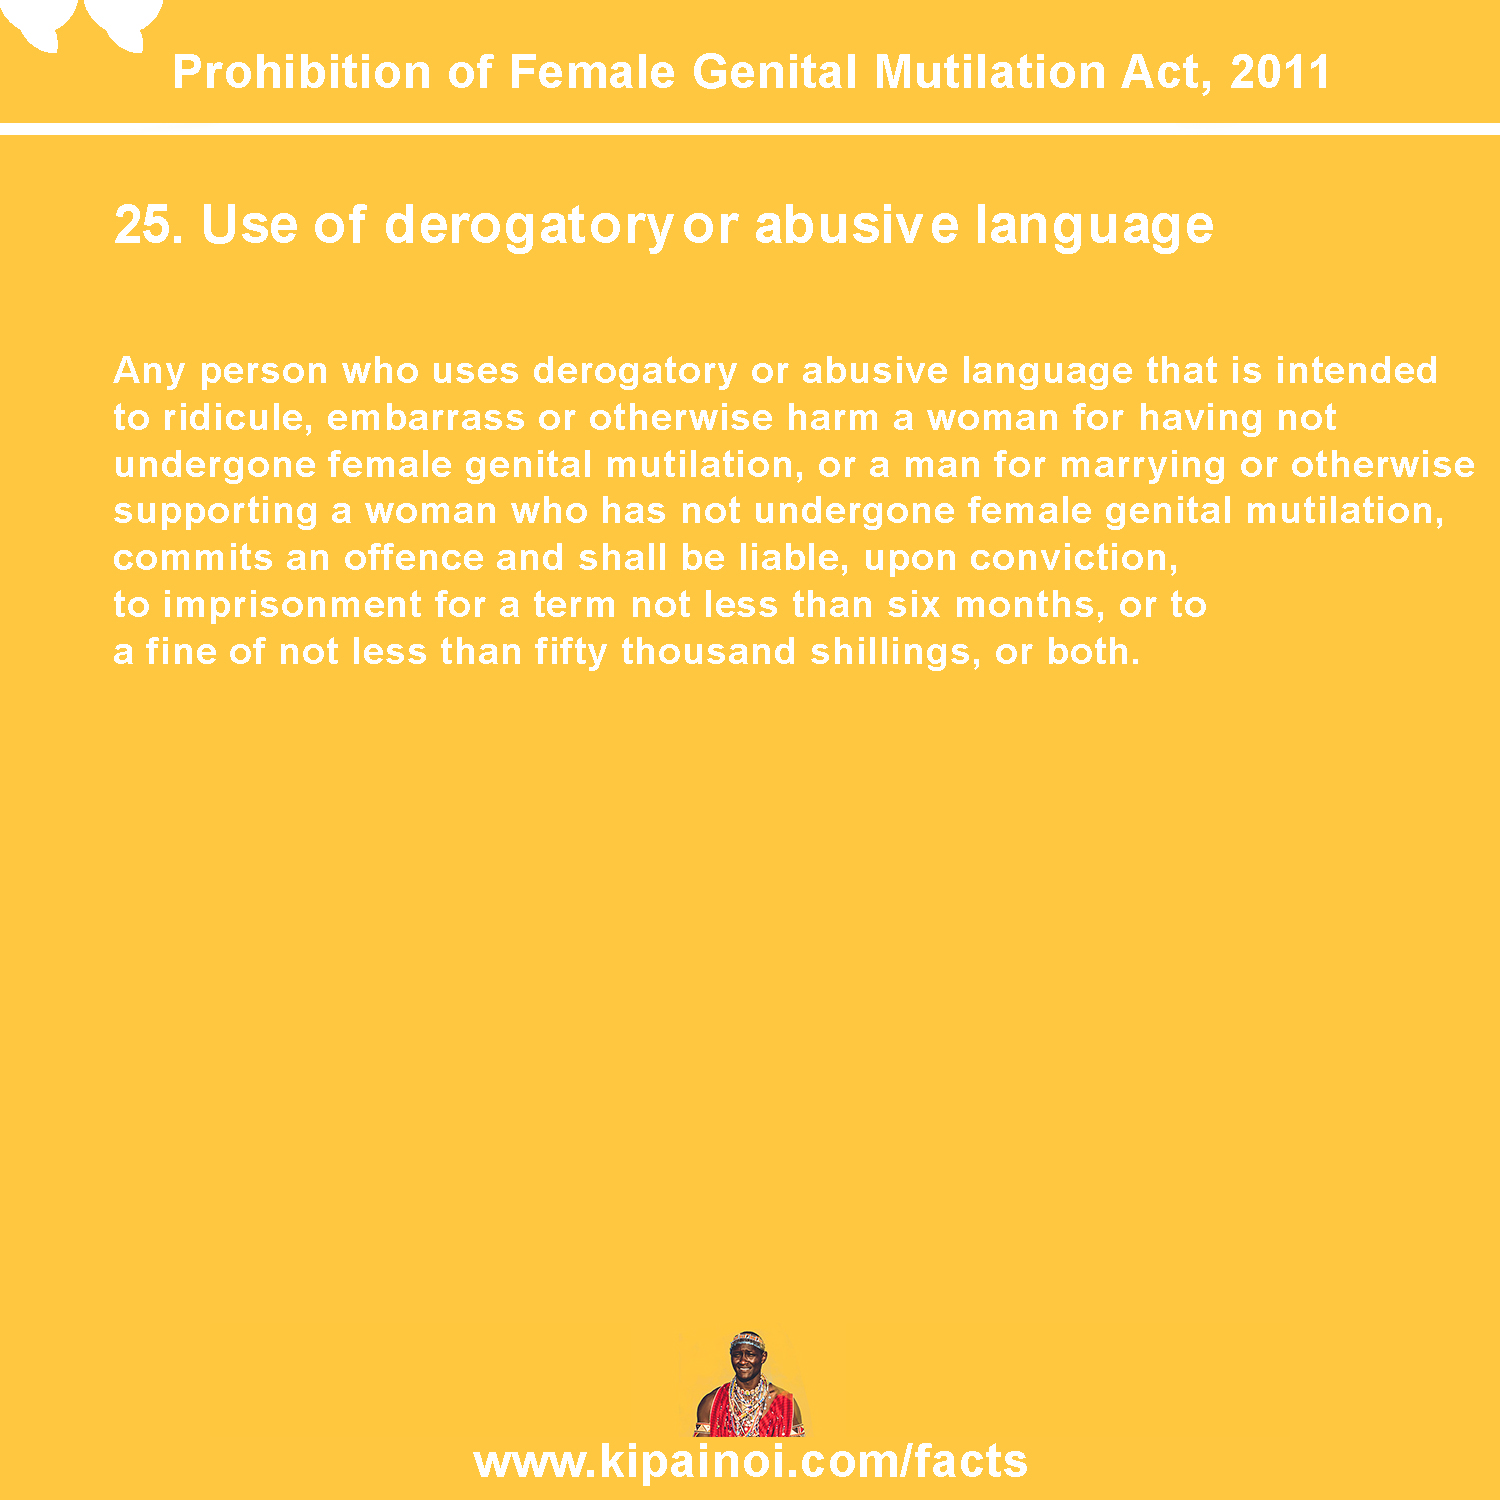 25. Use of derogatory or abusive language